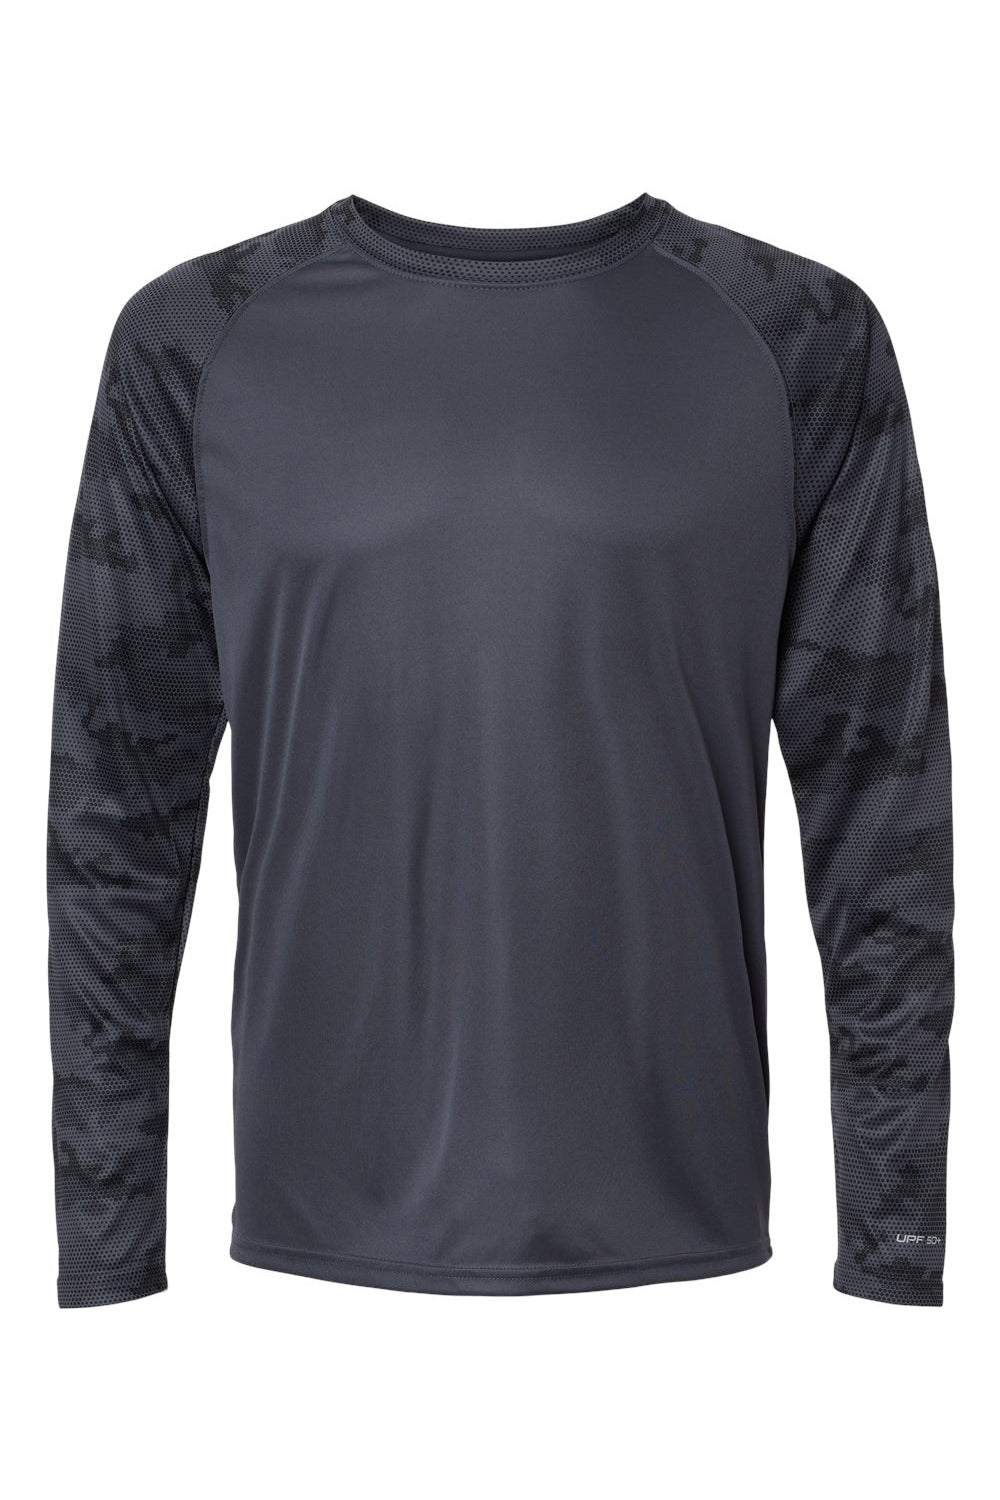 Paragon 216 Mens Cayman Performance Camo Colorblocked Long Sleeve Crewneck T-Shirt Graphite Grey Flat Front